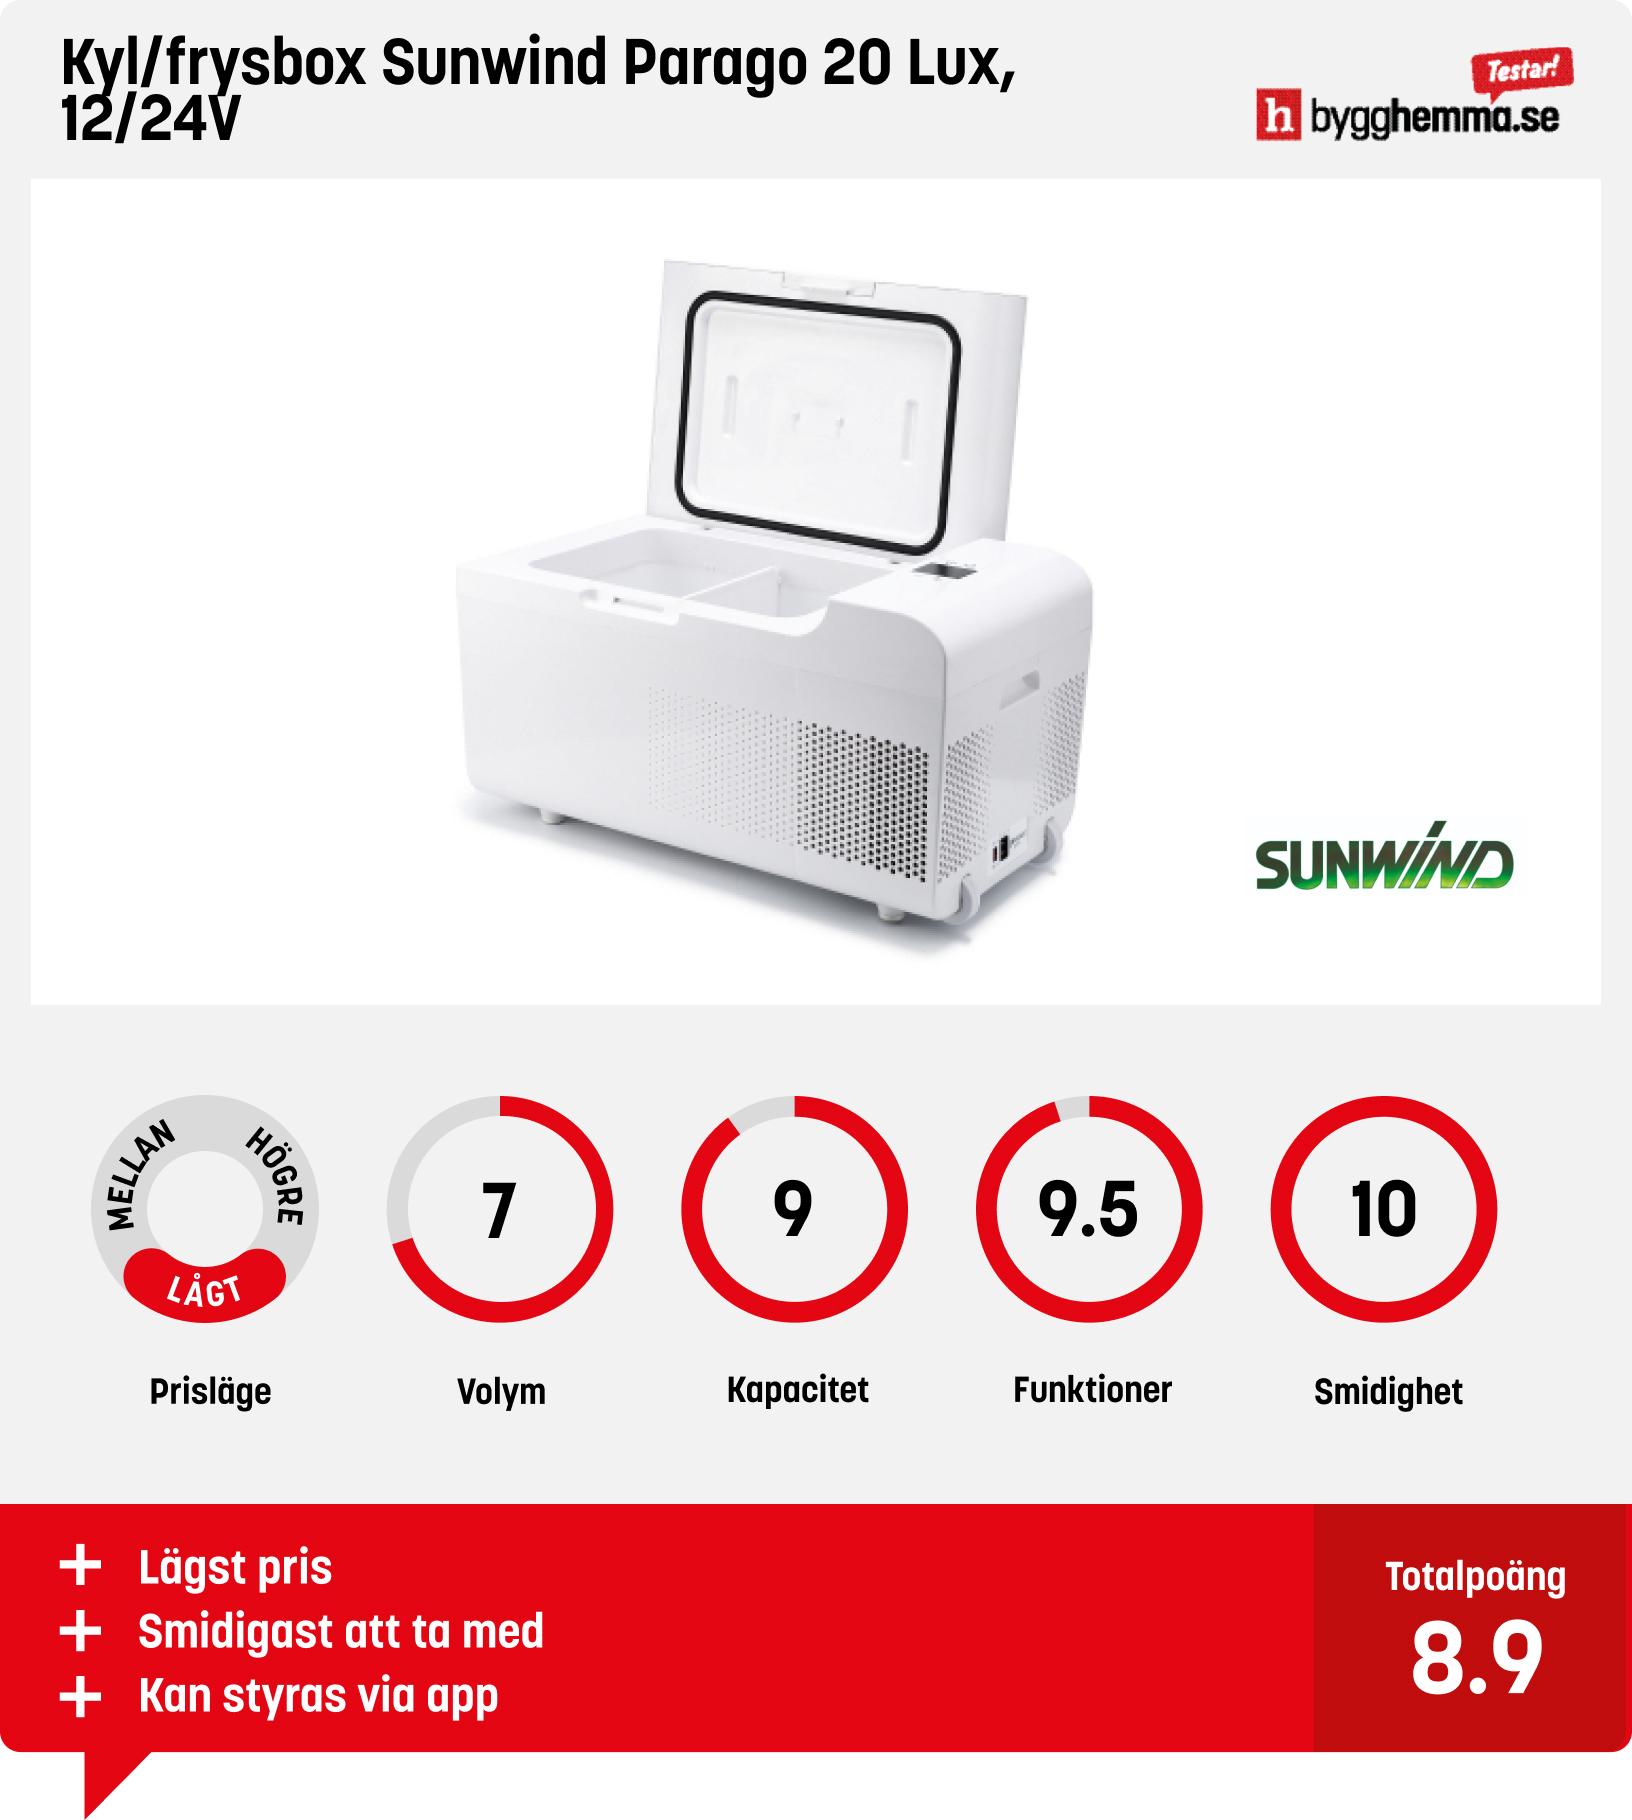 Frysbox bäst i test - Kyl/frysbox Sunwind Parago 20 Lux, 12/24V